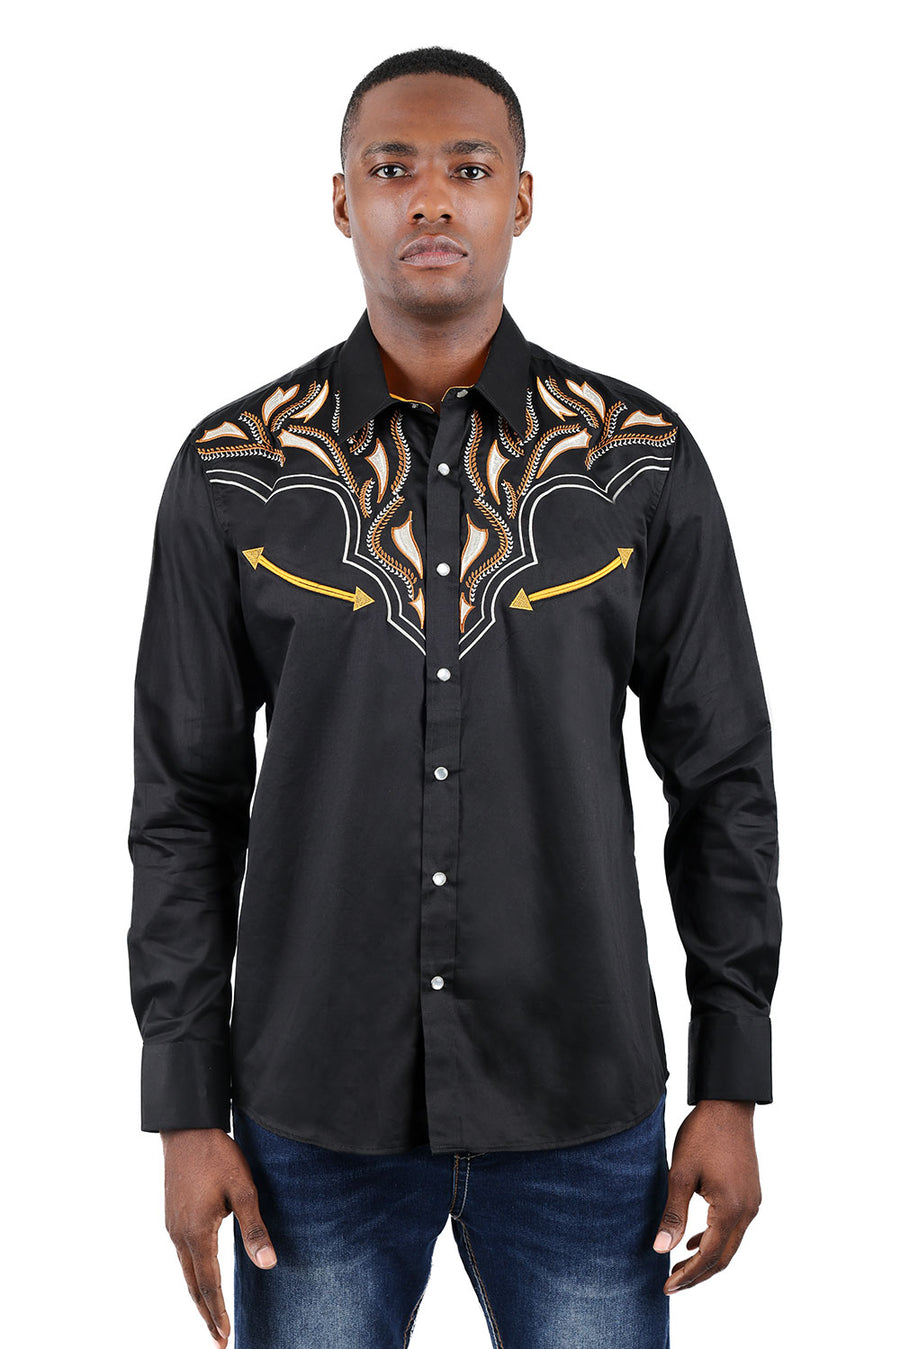 Barabas OCCIDENTAL ARROWS Black Western Shirt - Dudes Boutique